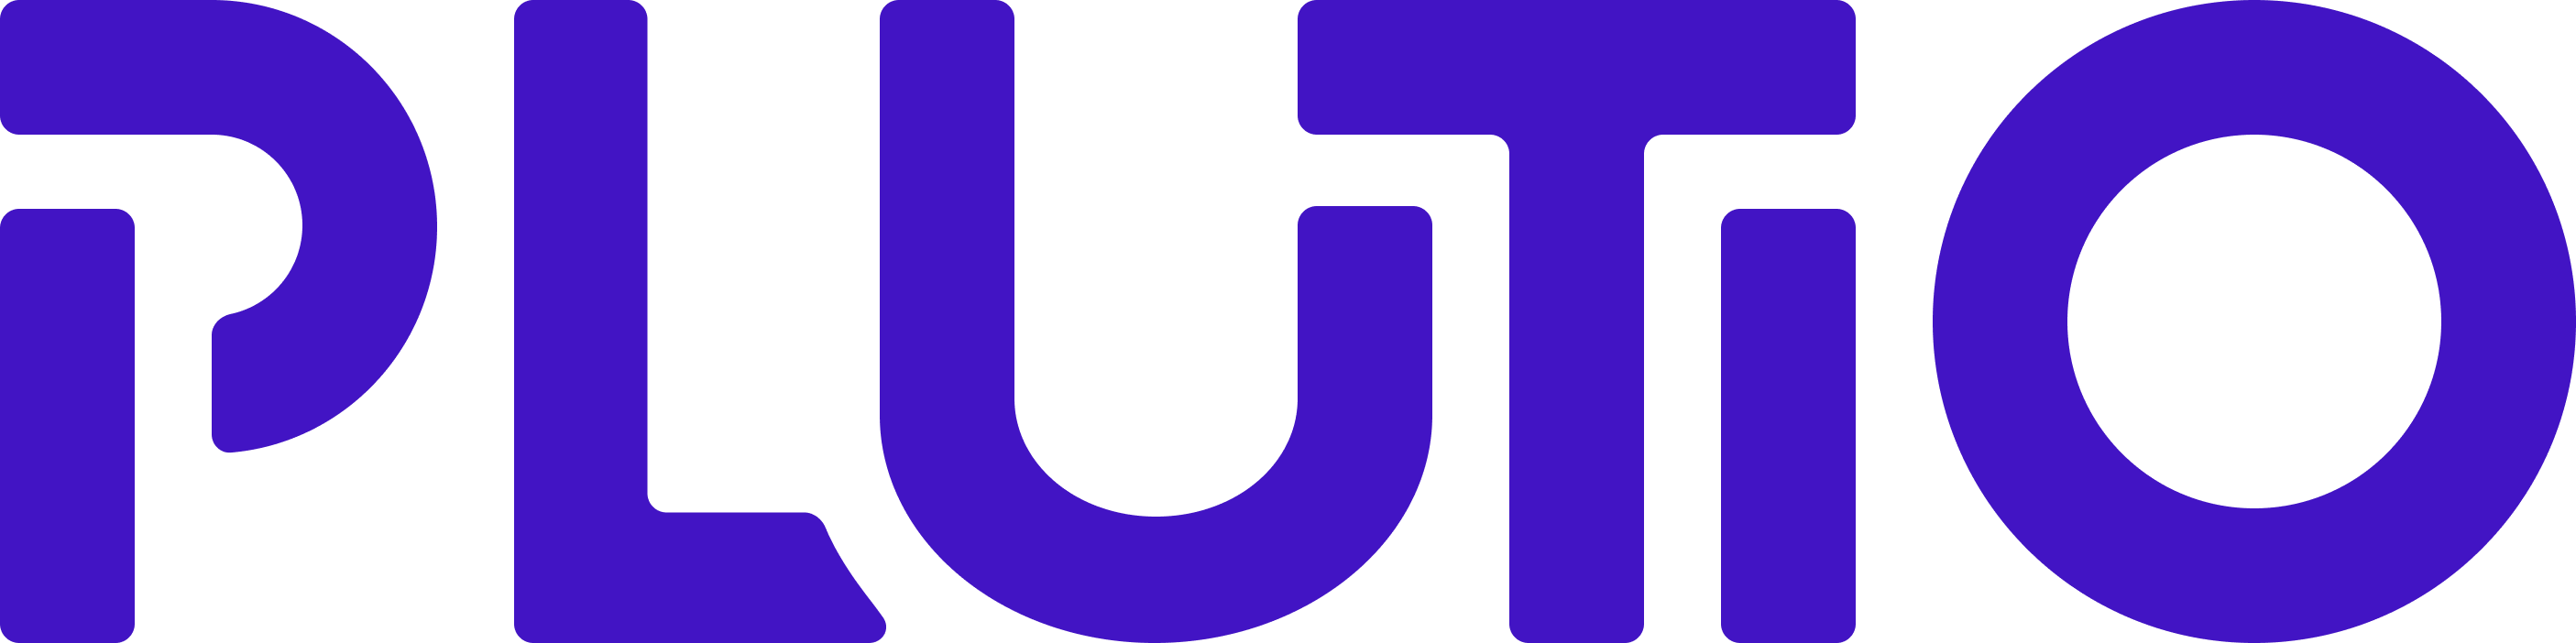 plutio-logo